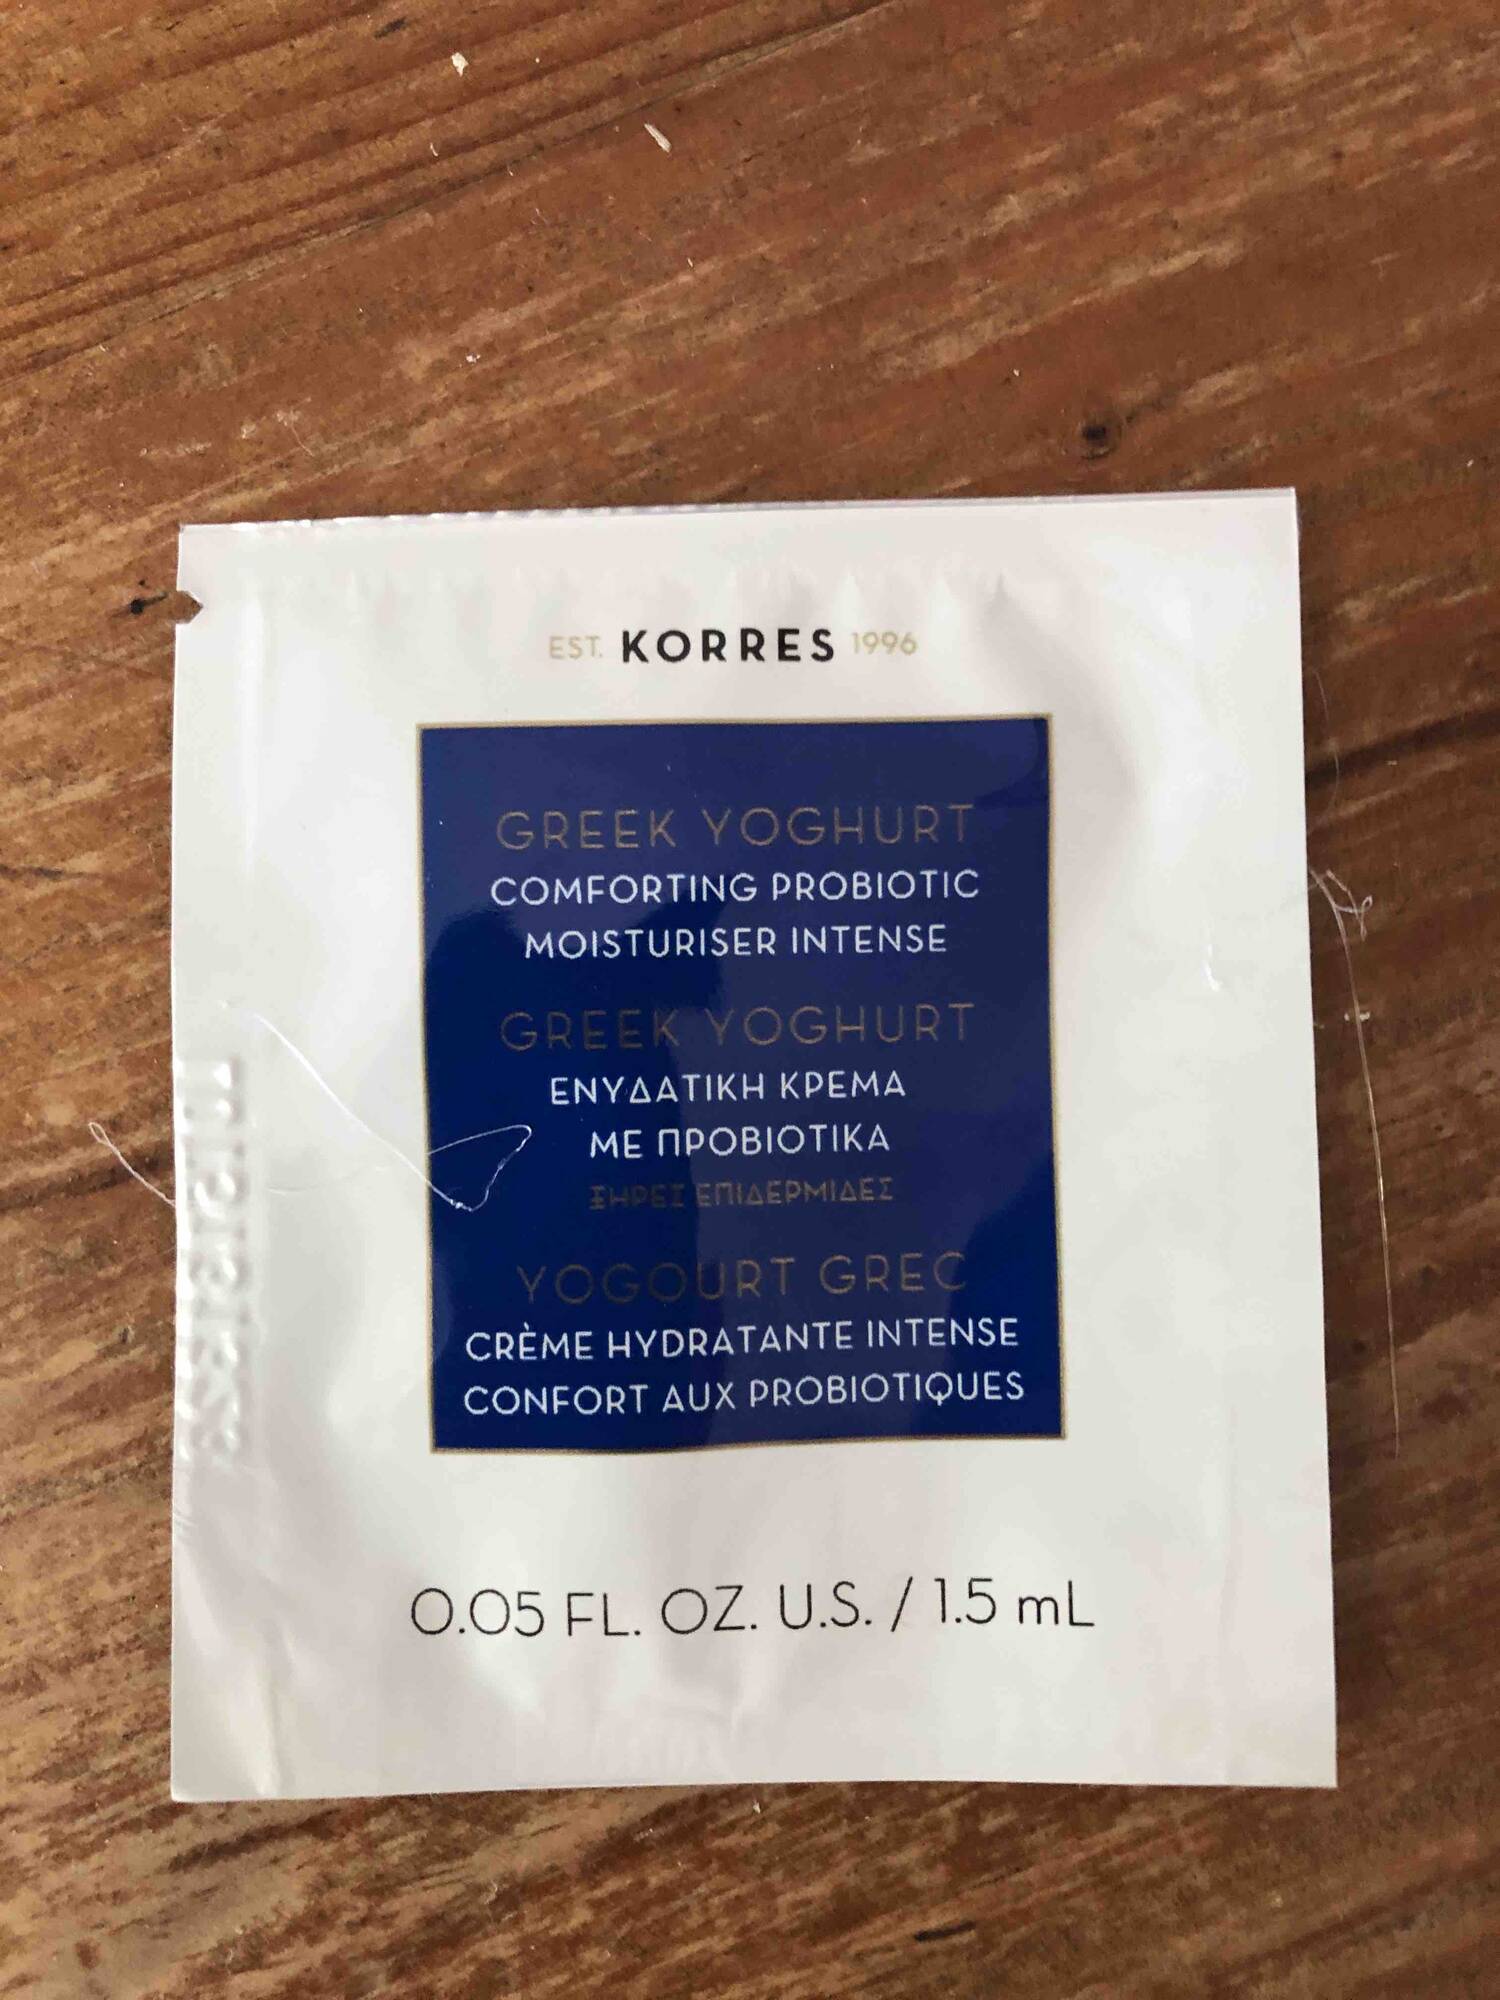 KORRES - Yogourt Grec - Crème hydratante intense